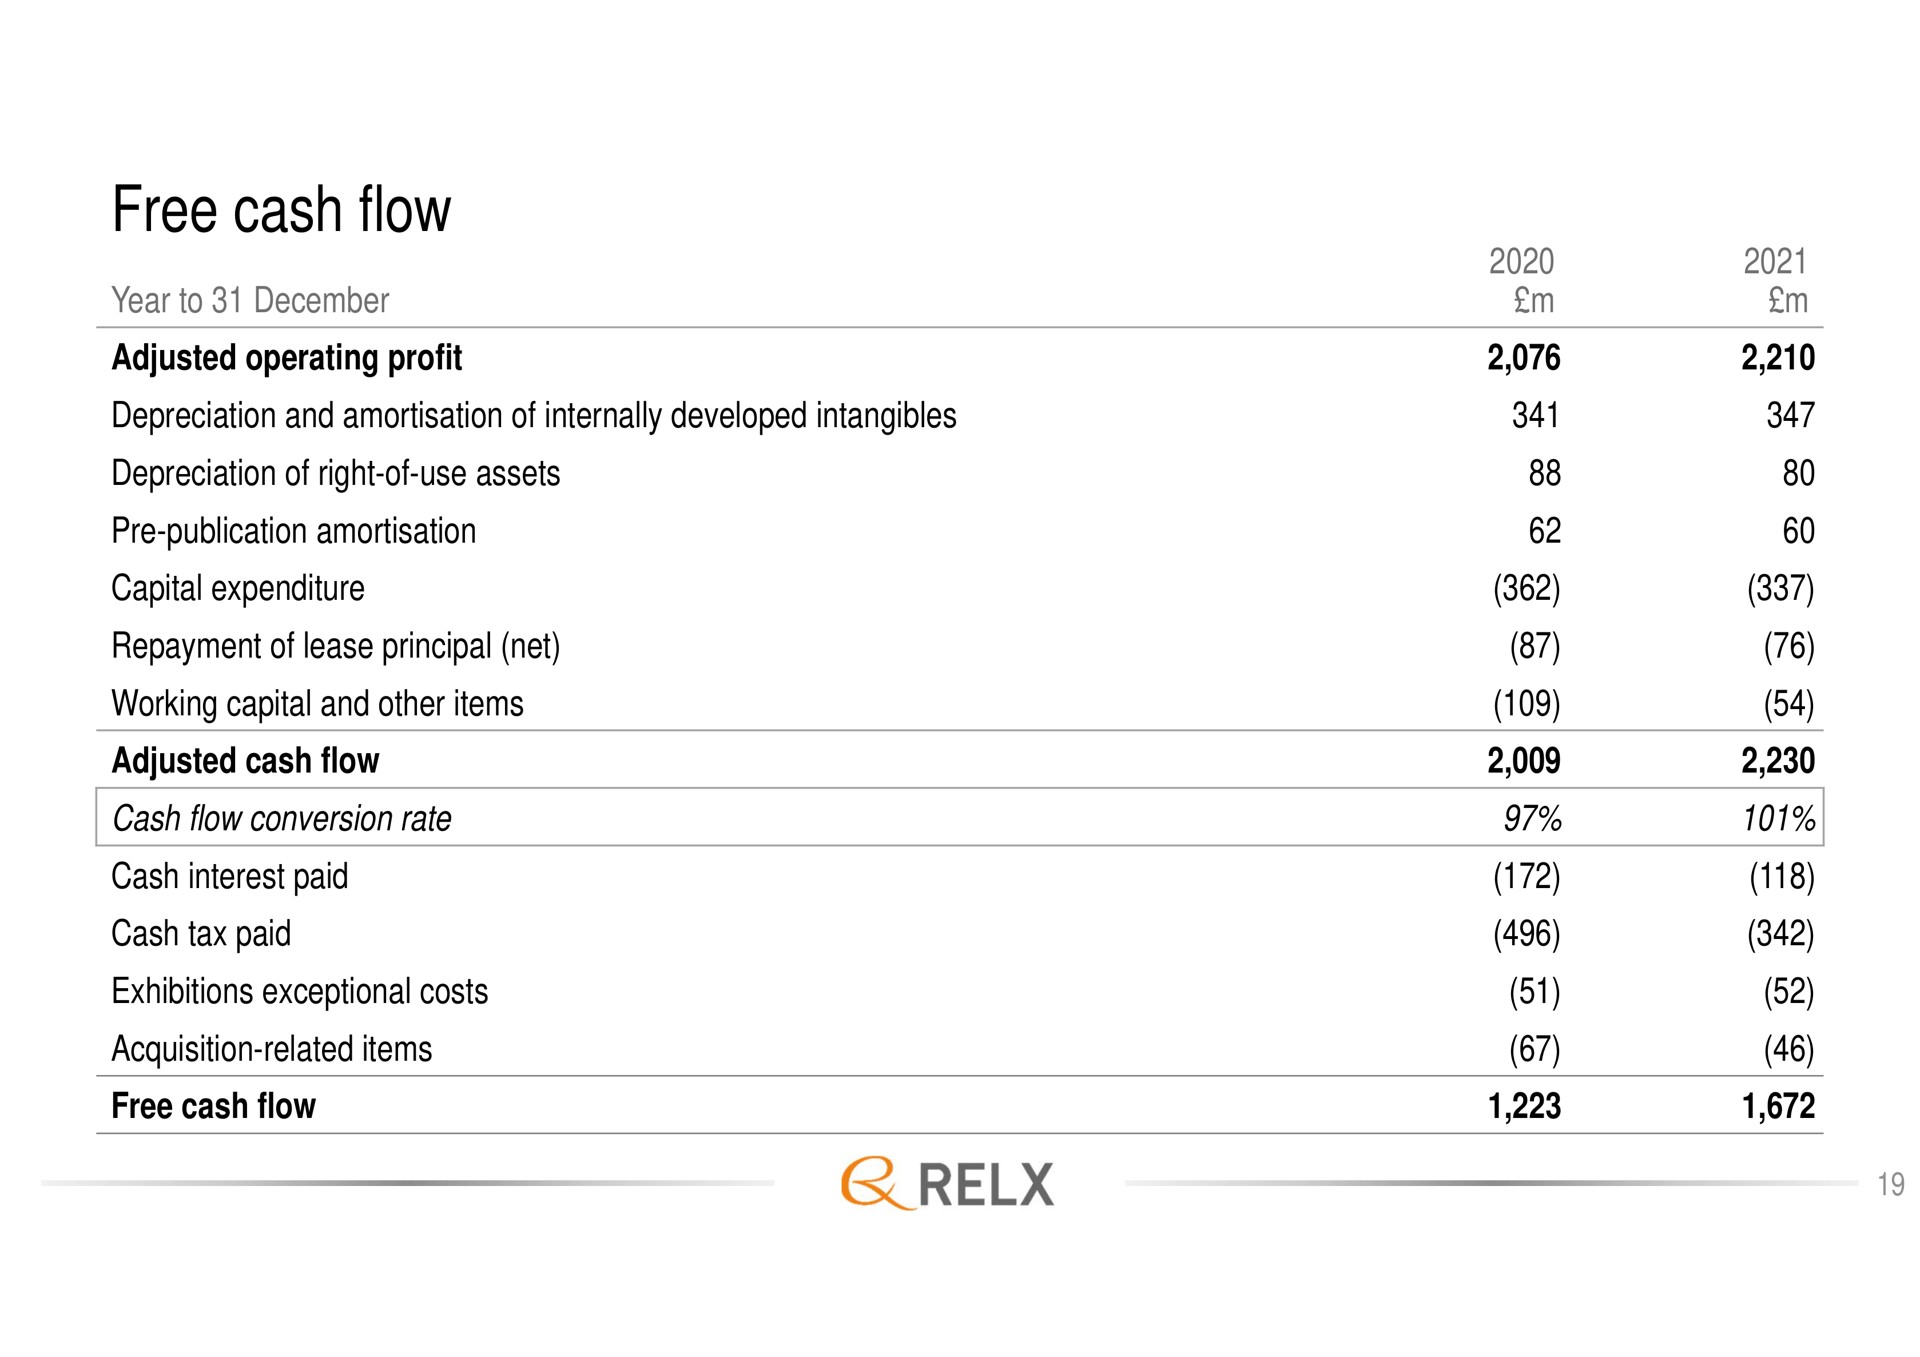 free cash flow is | RELX